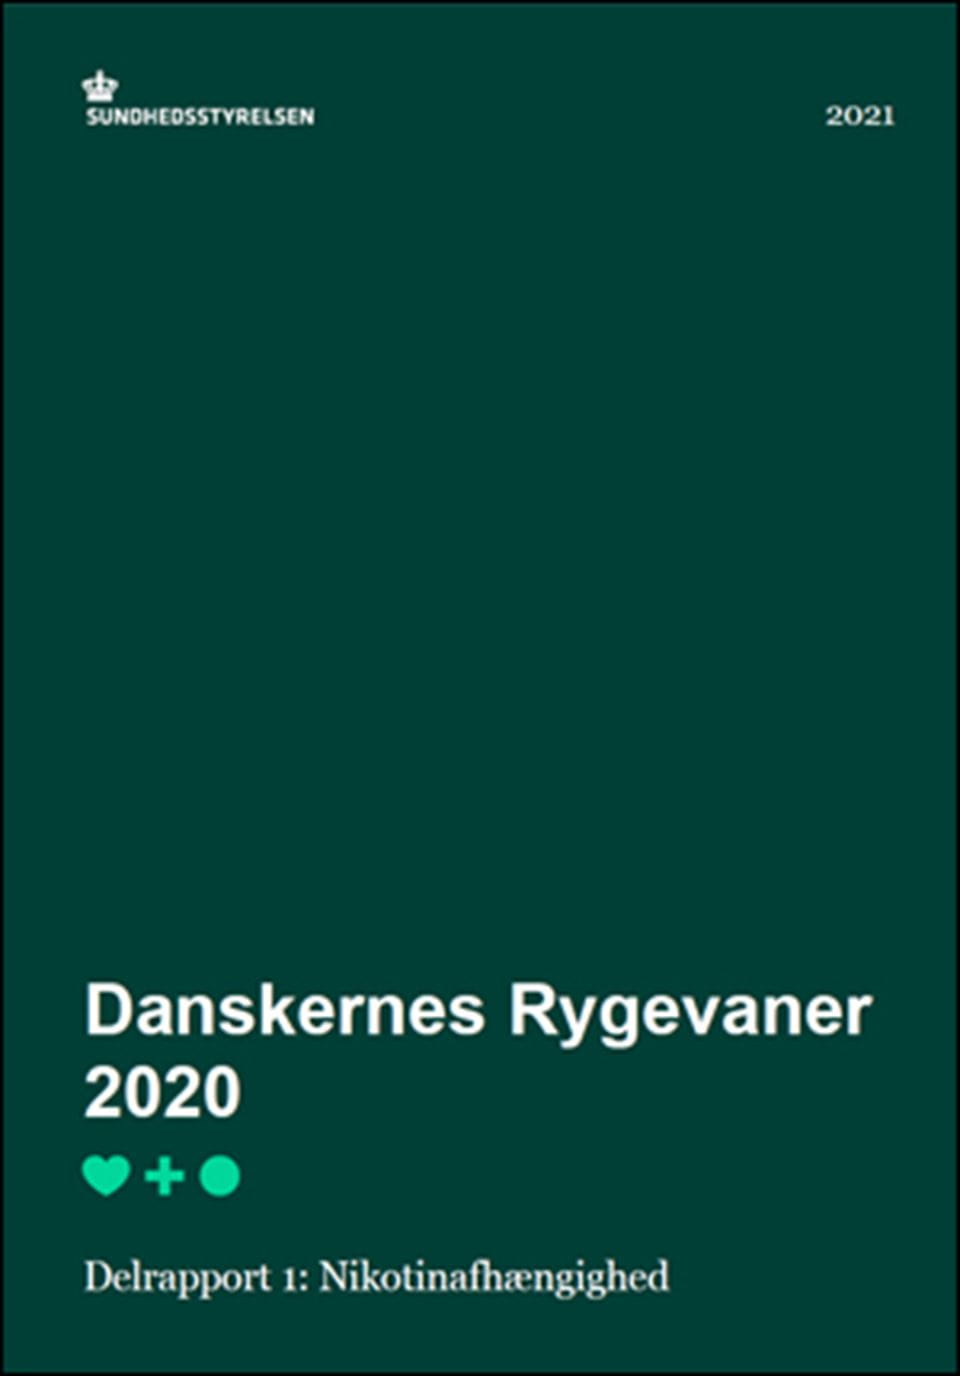 Danskernes rygevaner 2020 - Delrapport 1